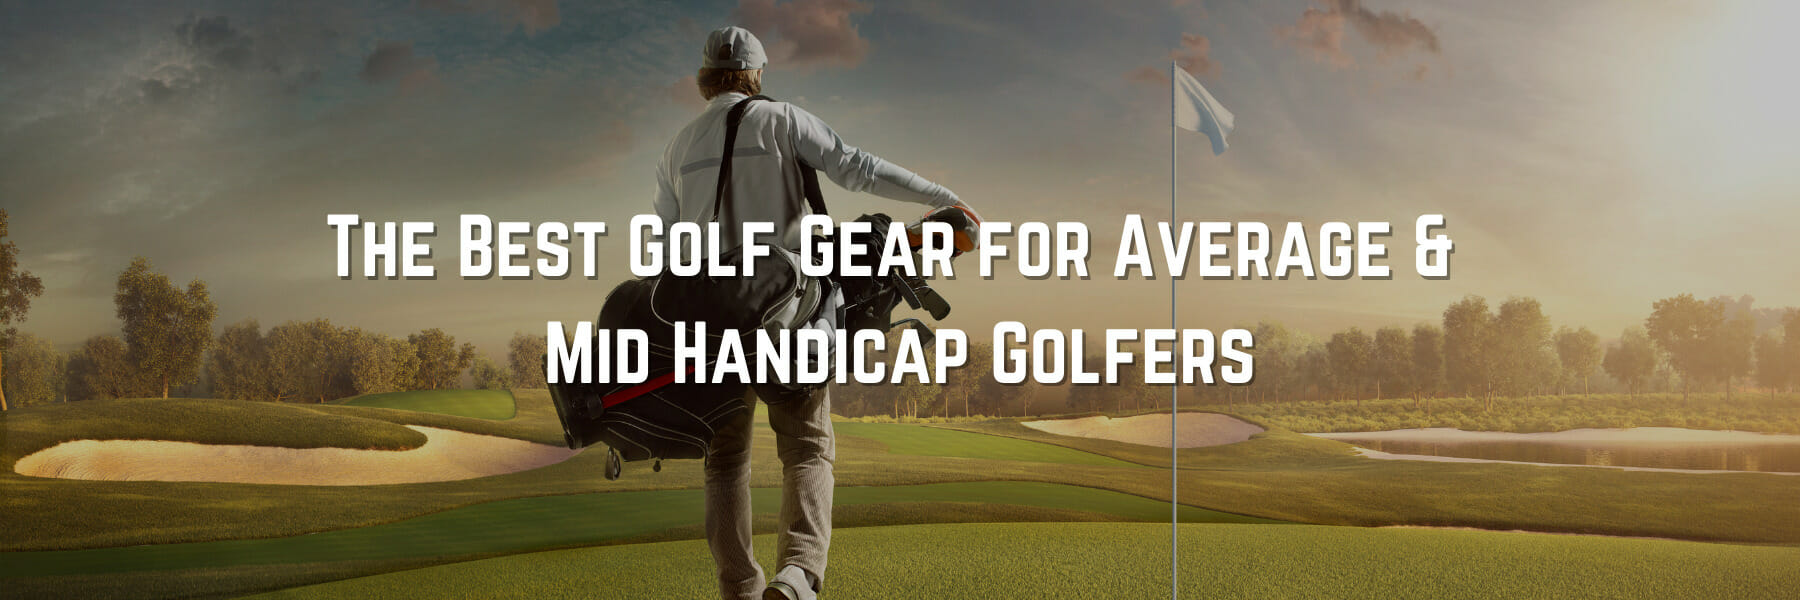 The Best Golf Gear for Average & Mid Handicap Golfers